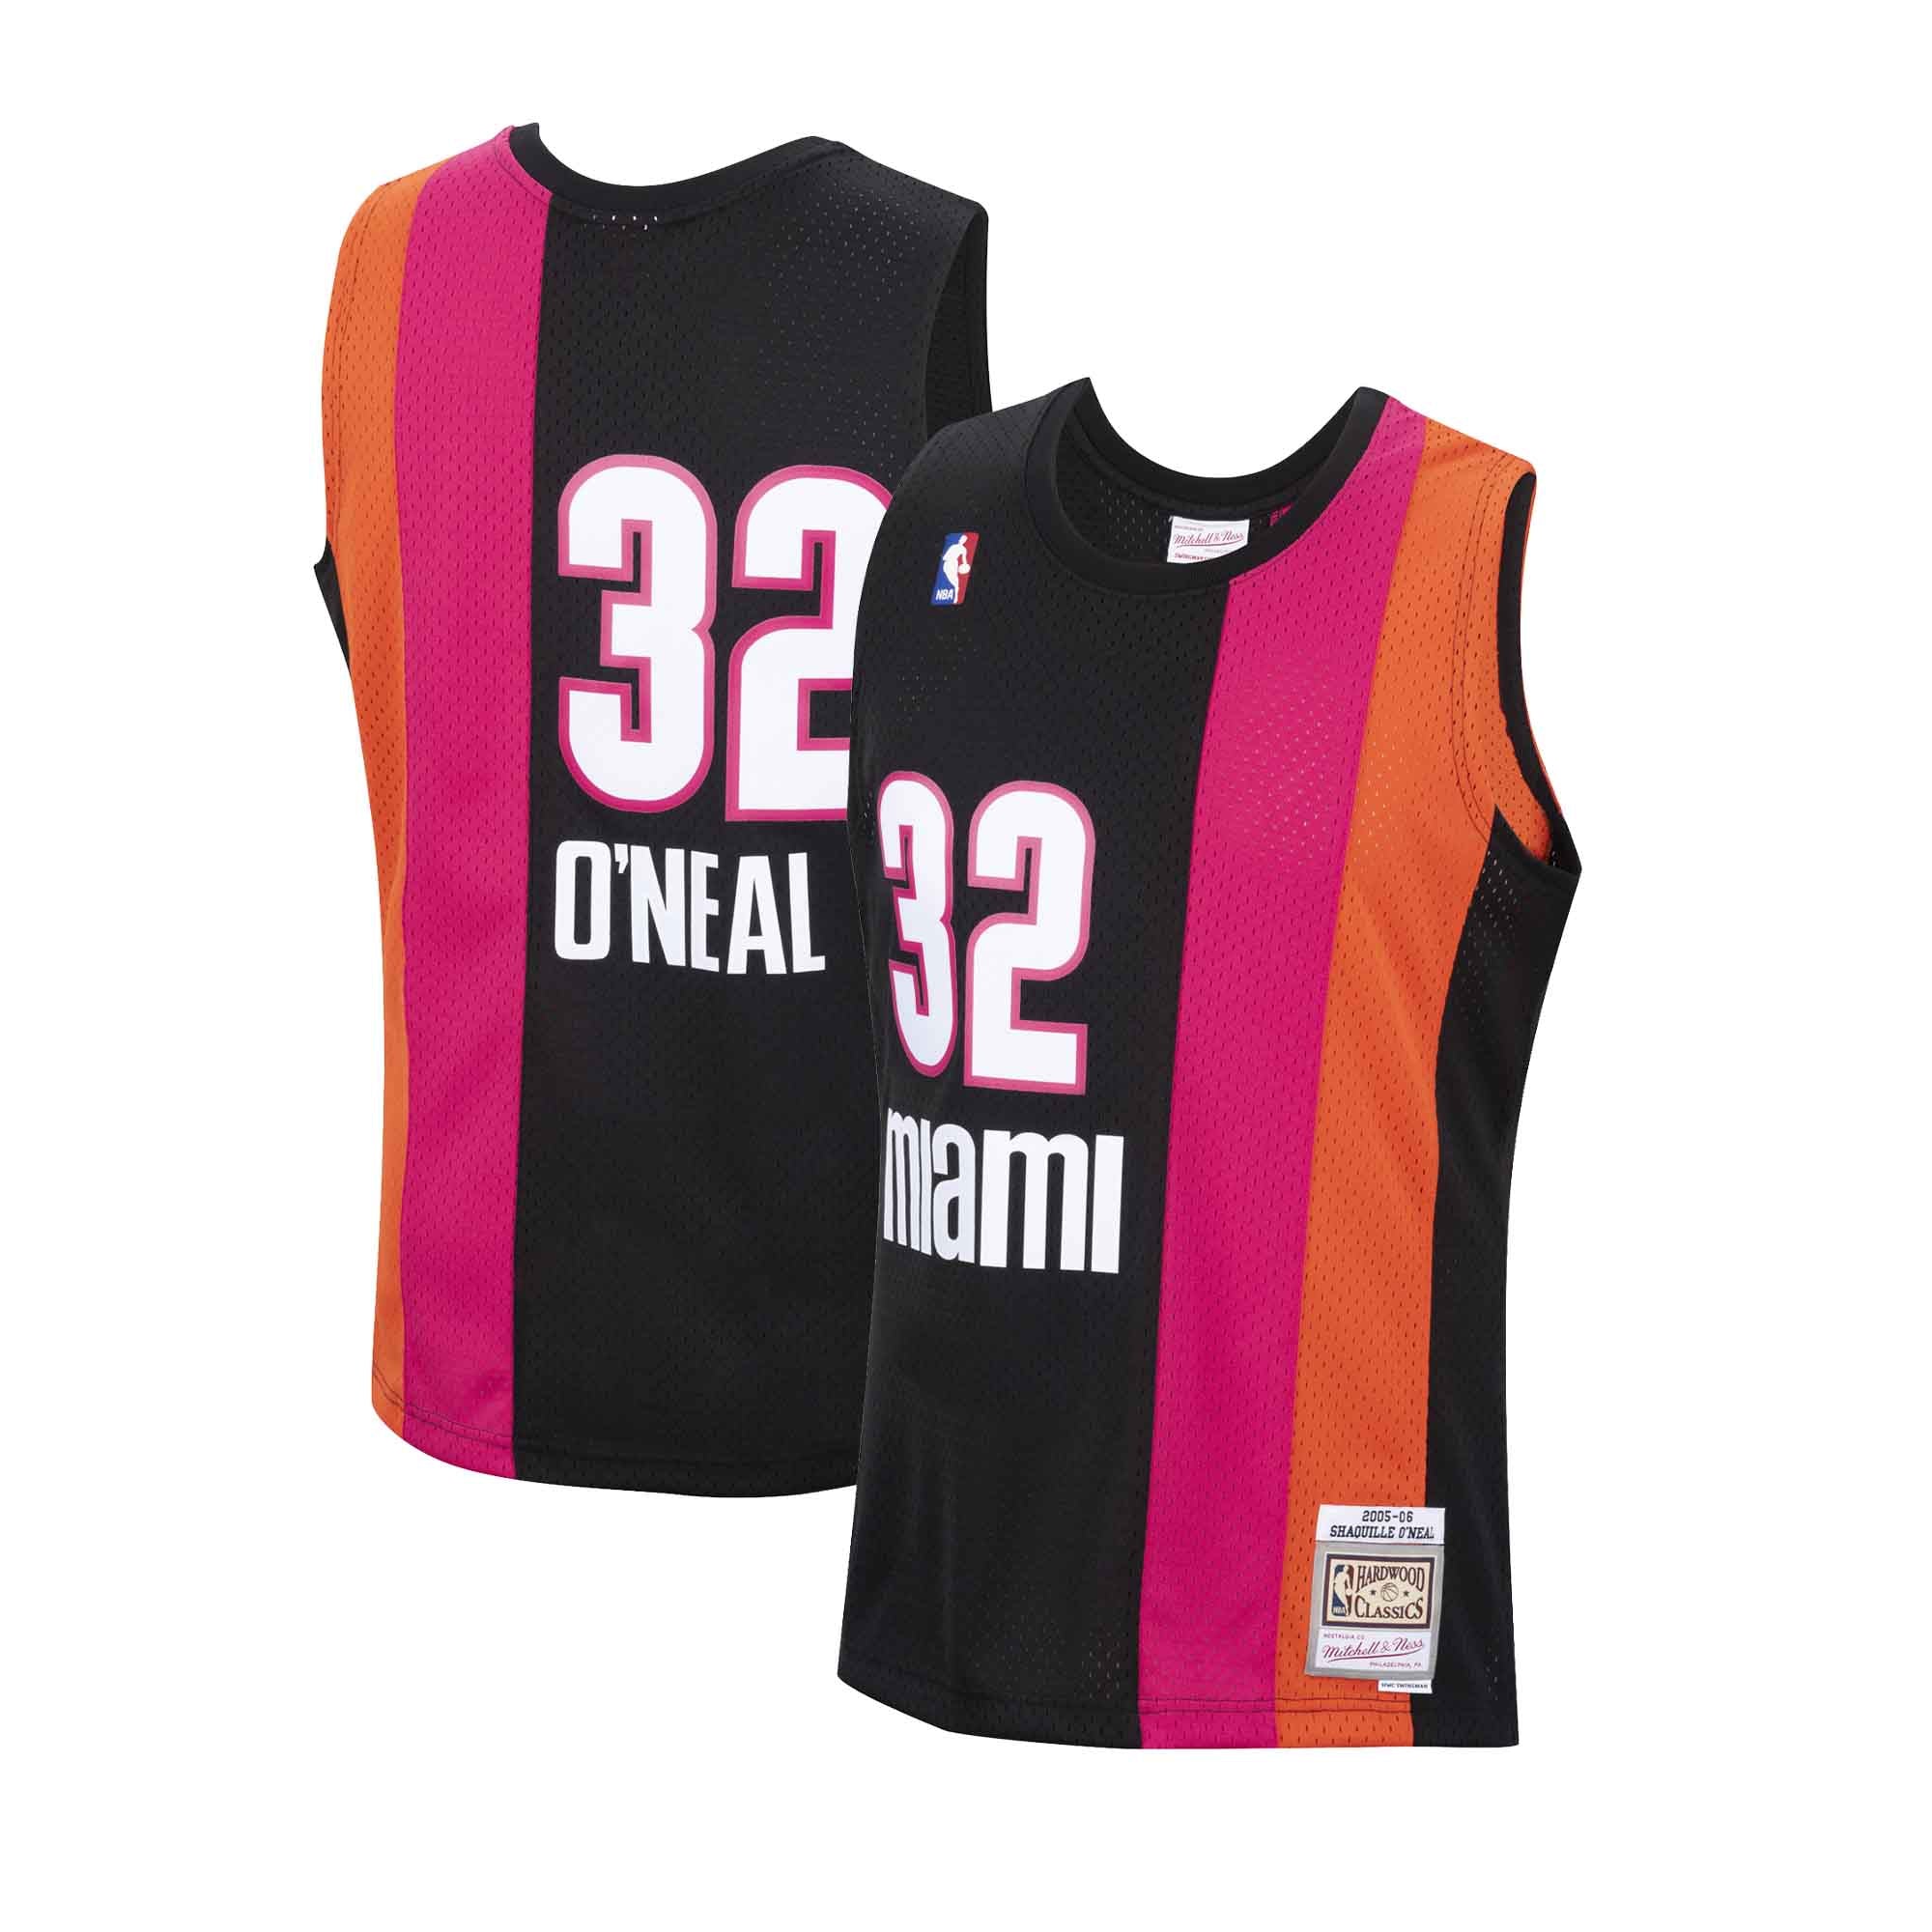 Mitchell & Ness Orlando Magic #32 Shaquille O'Neal black Swingman Jersey